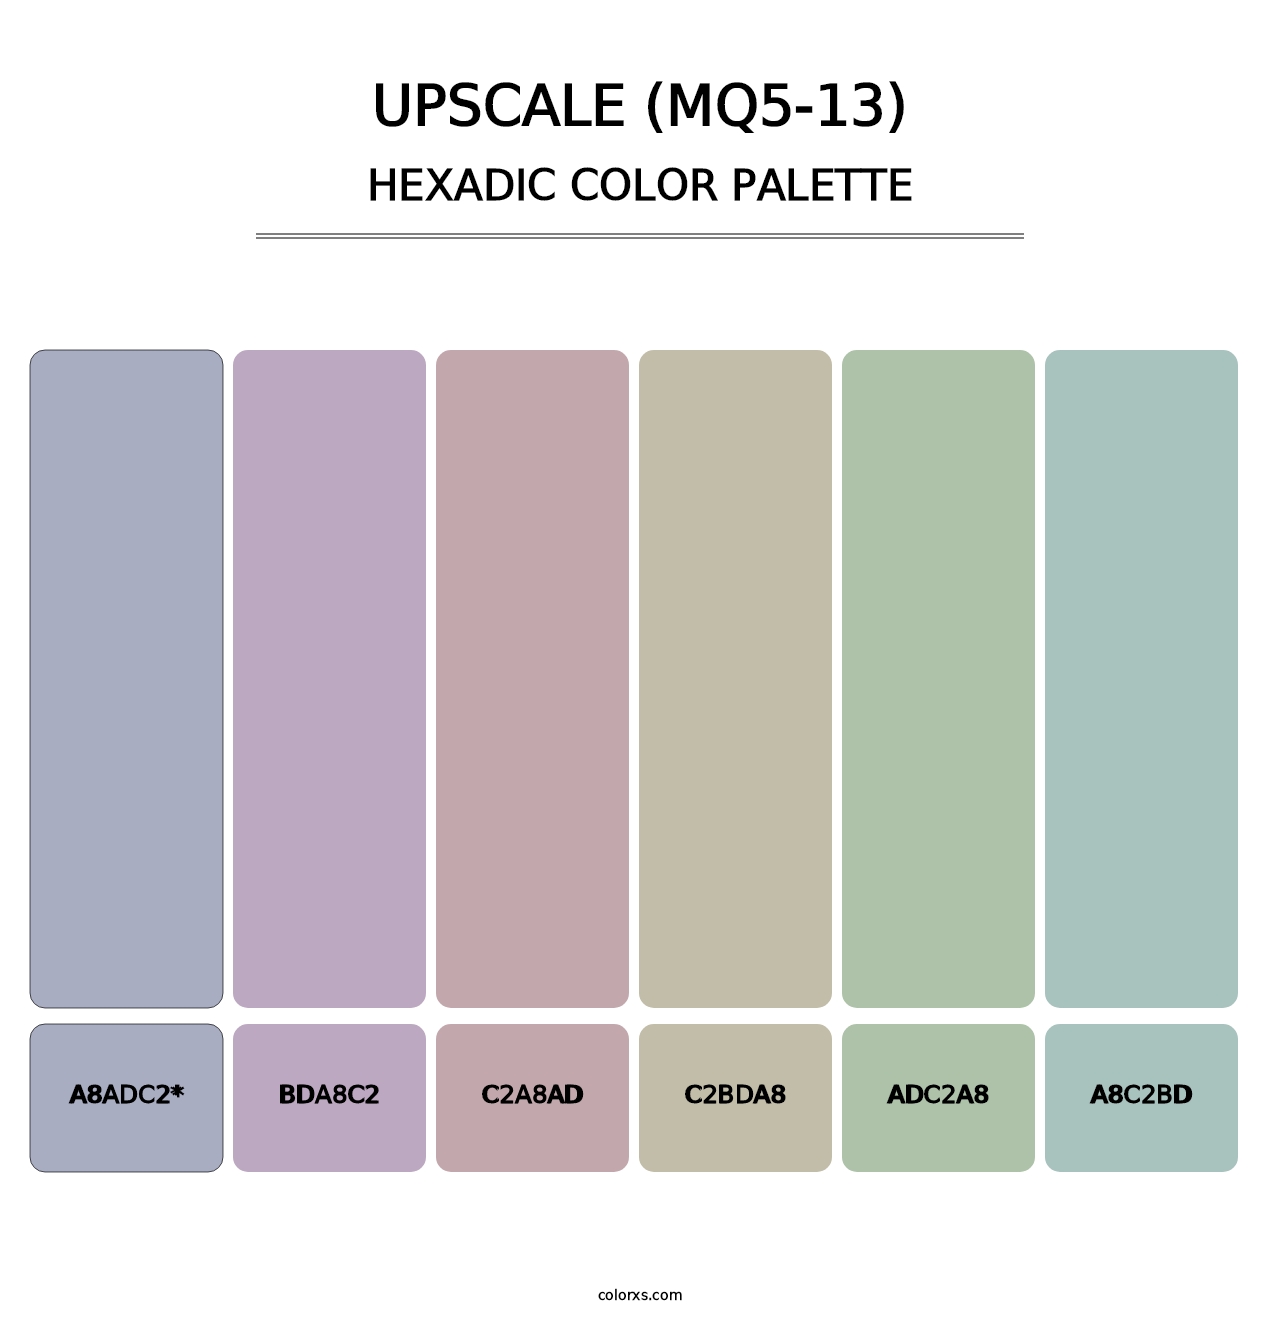 Upscale (MQ5-13) - Hexadic Color Palette